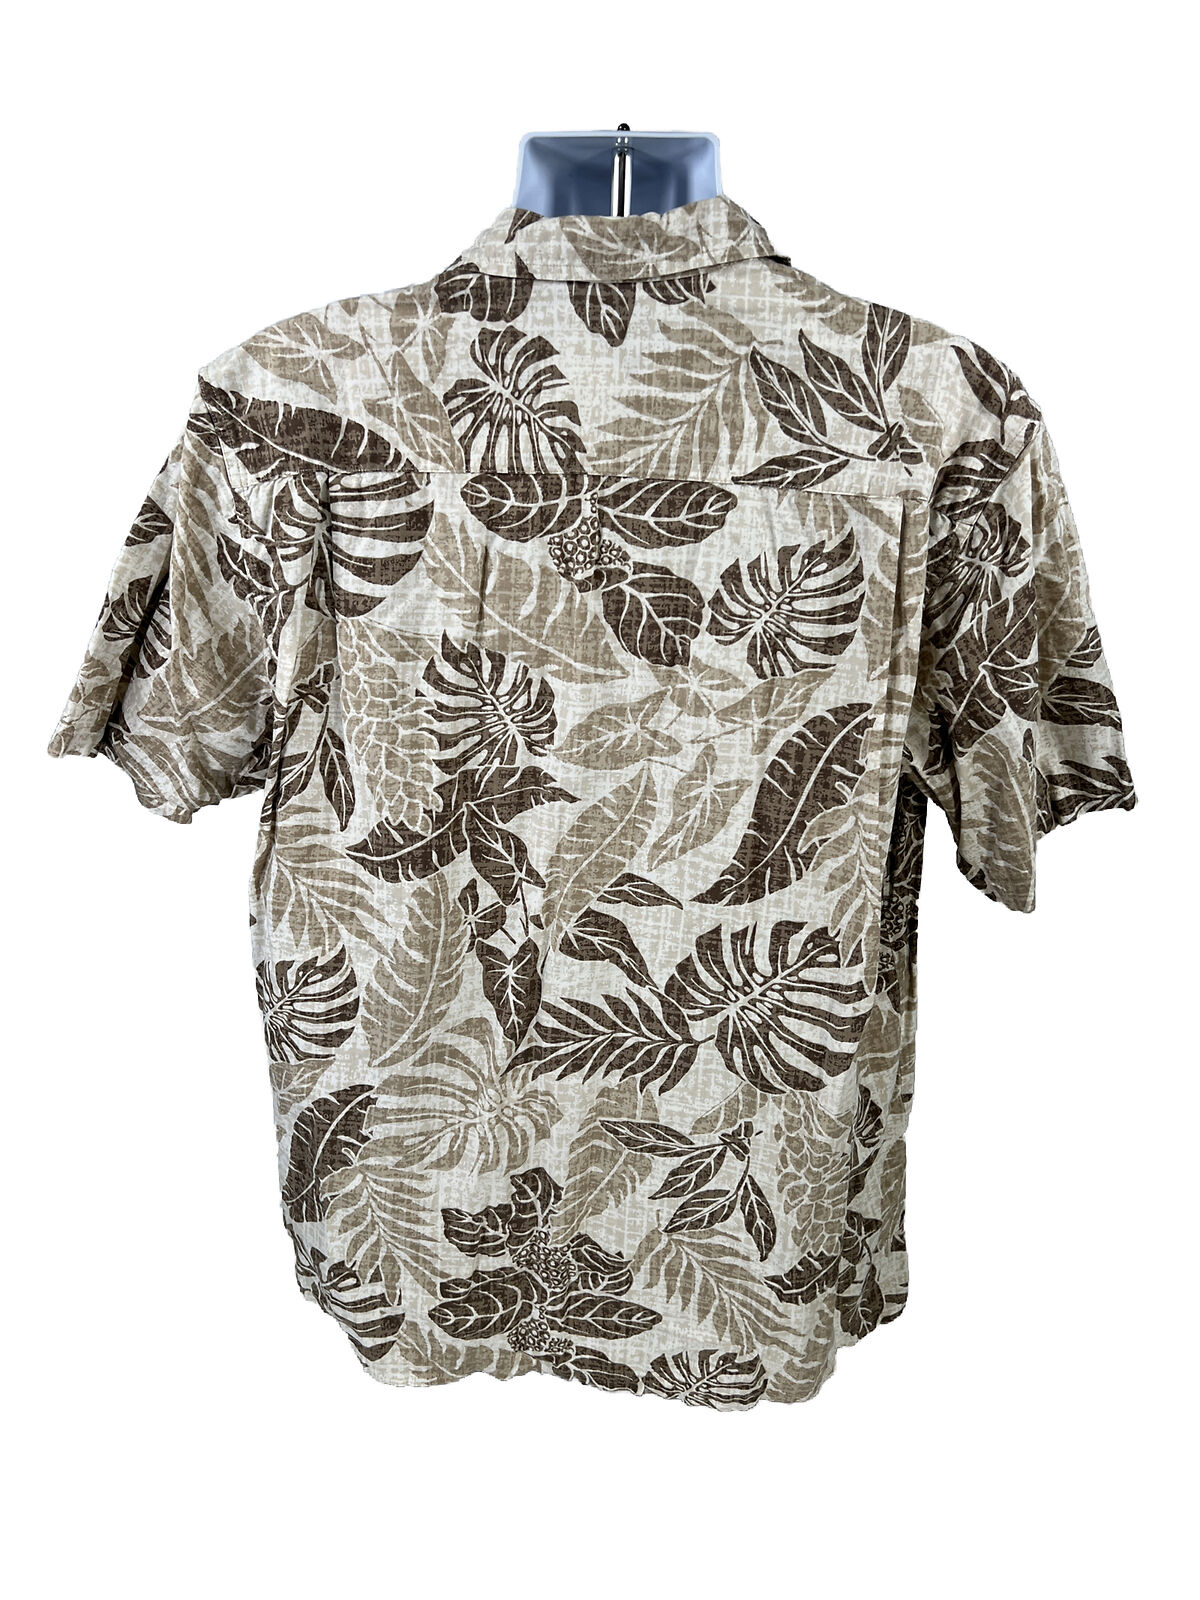 Columbia Men's Brown Hawaiian Print Short Sleeve Button Up Shirt - L